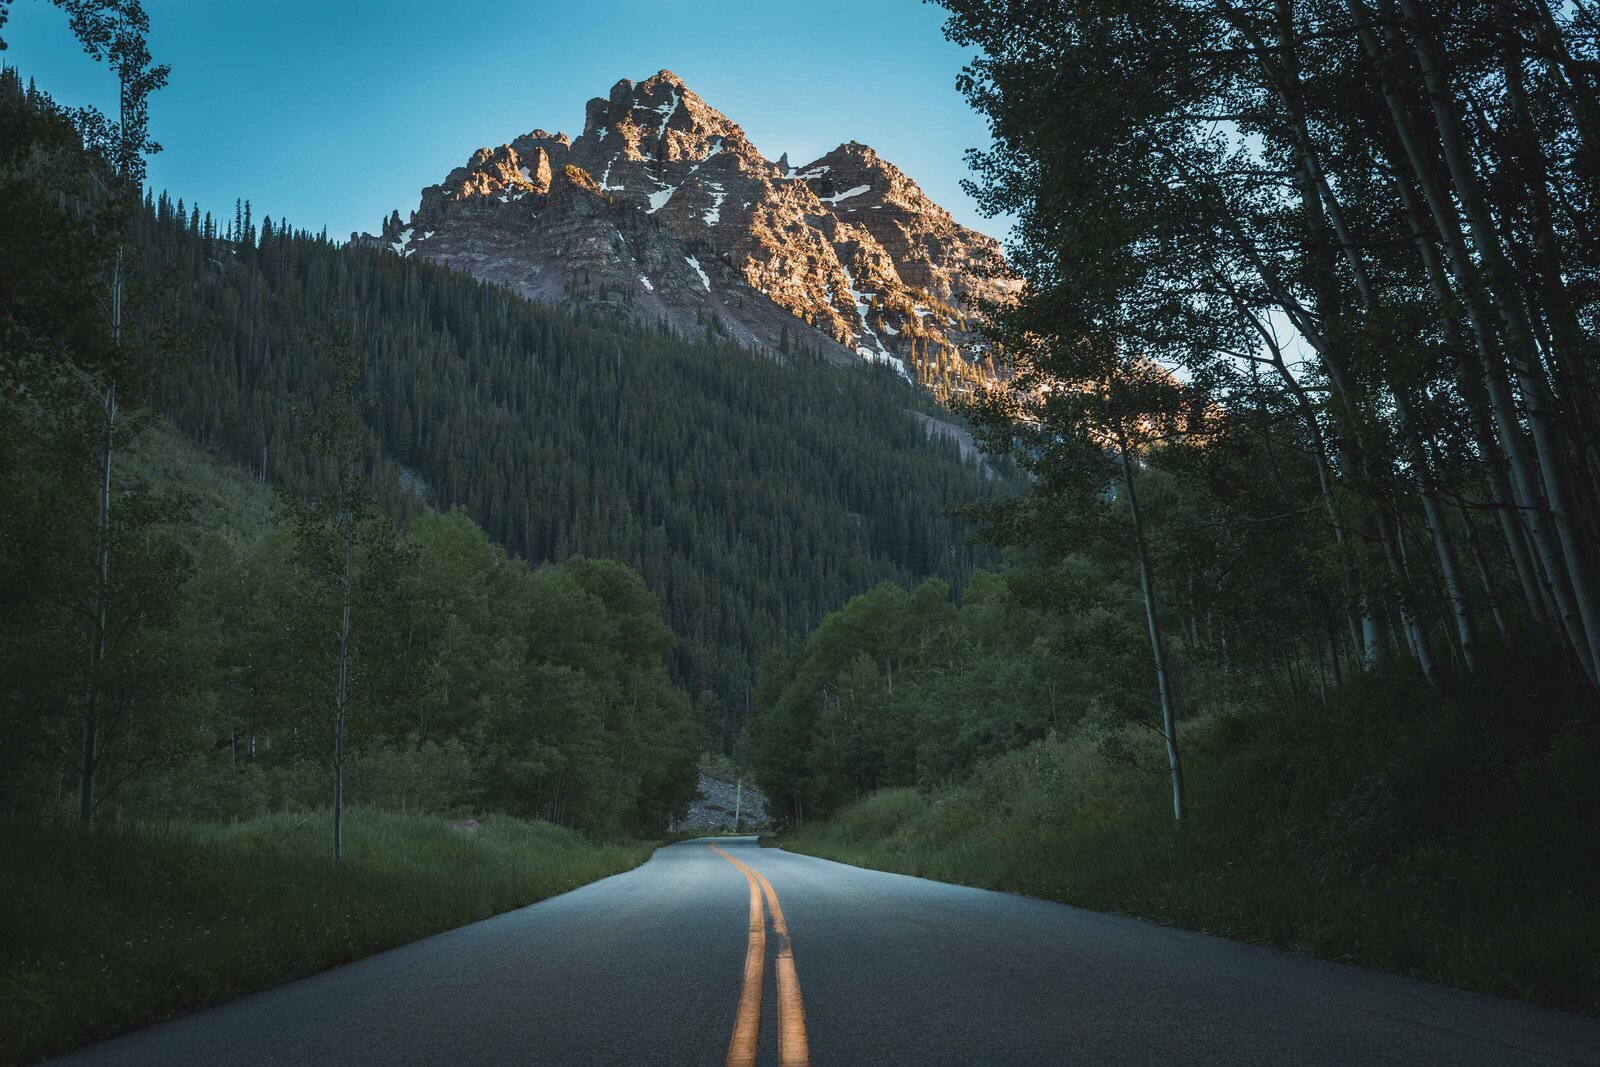 Road Toward Mountains Symbolizing Account-Based Marketing Goals - SalesLeap